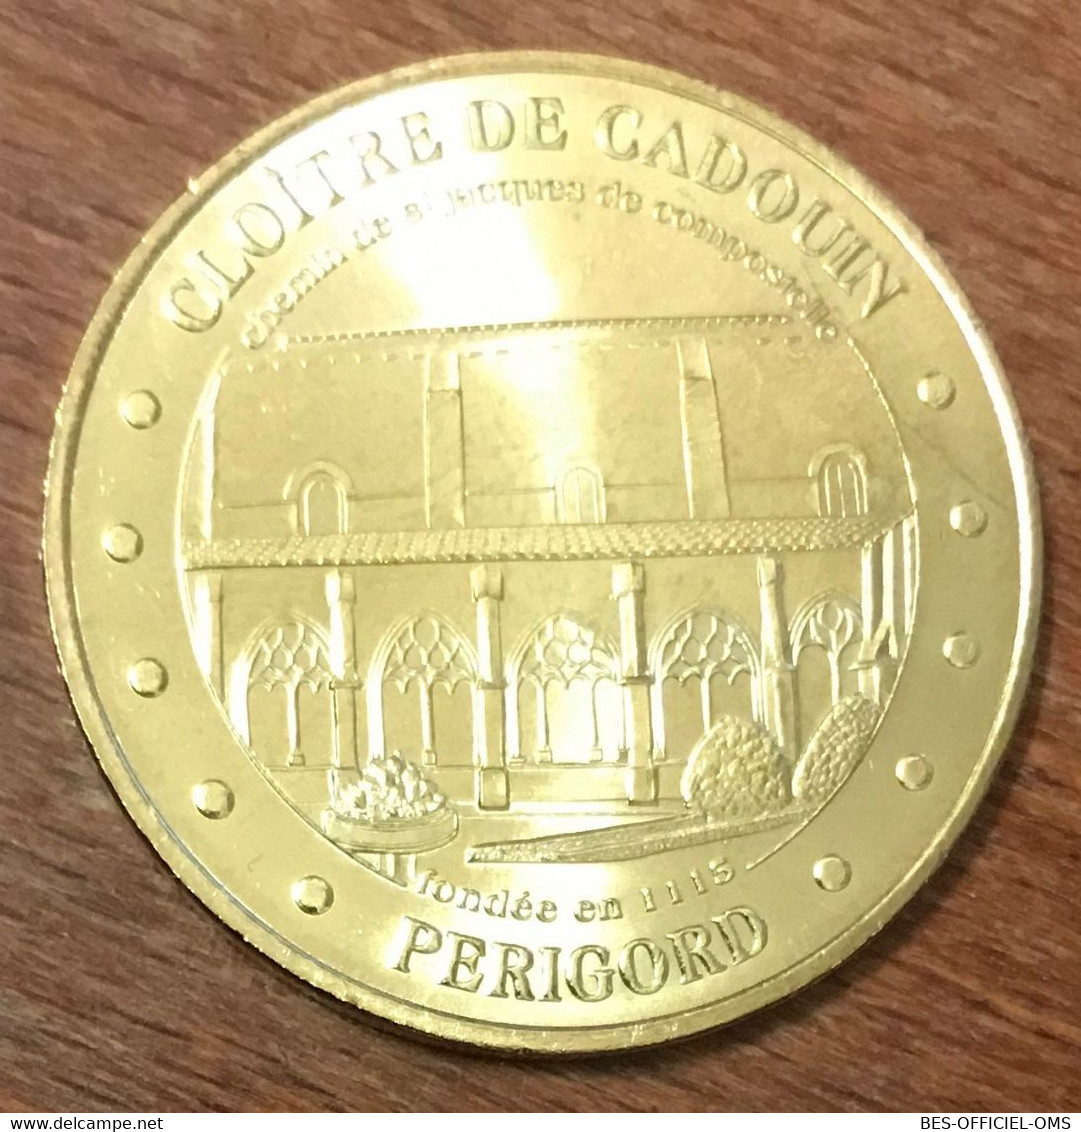 24 CLOÎTRE DE CADOUIN PÉRIGORD  MDP 2005 MEDAILLE SOUVENIR MONNAIE DE PARIS JETON TOURISTIQUE MEDALS COINS TOKENS - 2005